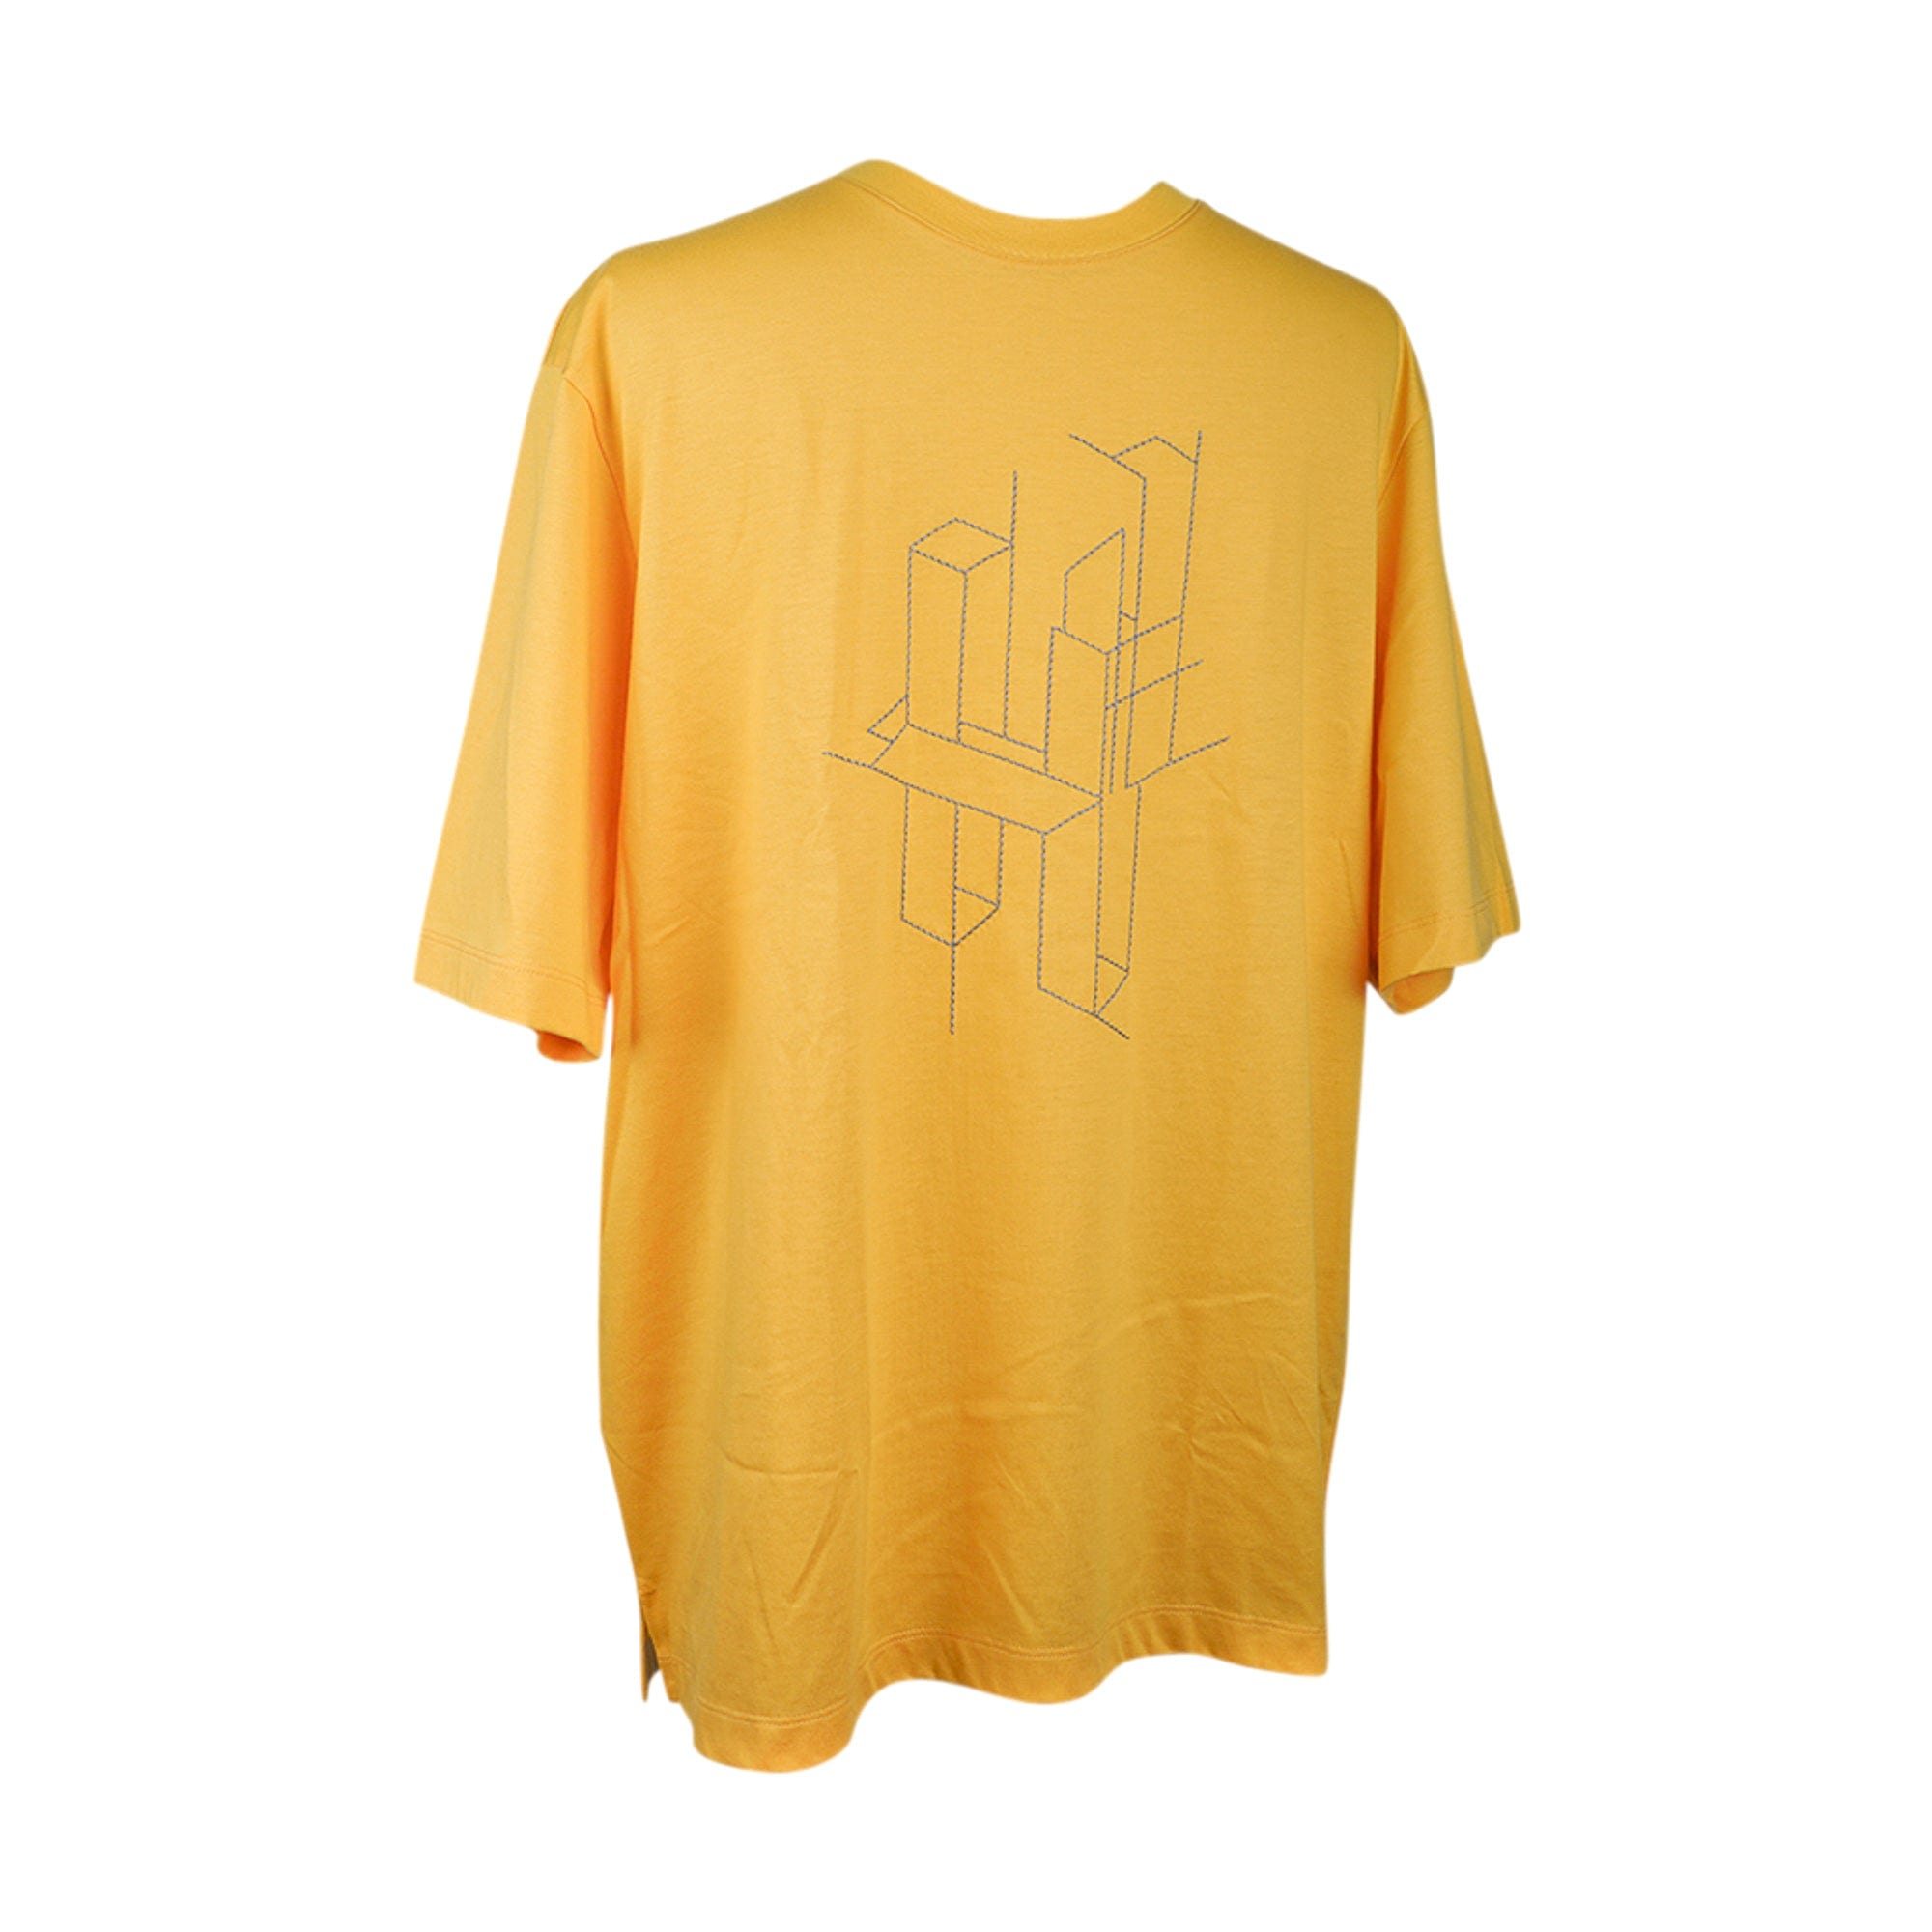 Hermes Men's T-Shirt in Jaune D'Or Cotton Medium